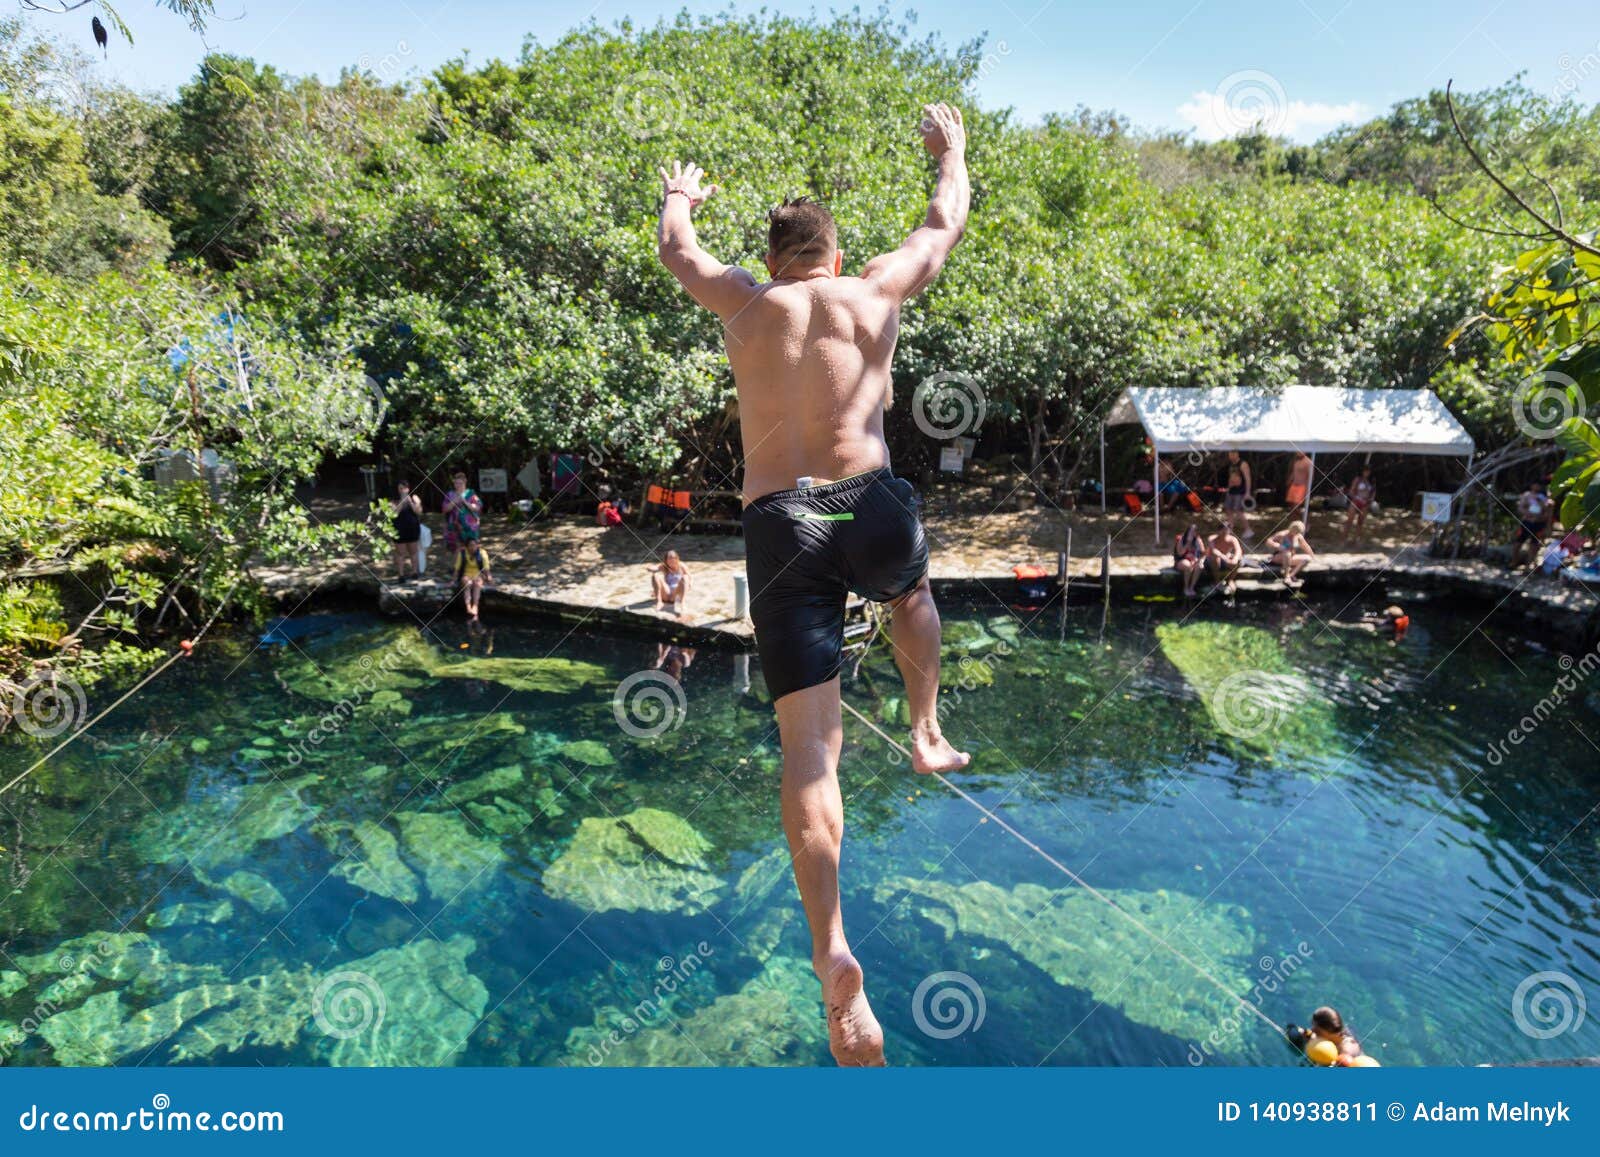 man jumps off a cliff into the cristalino cenote in mexico.